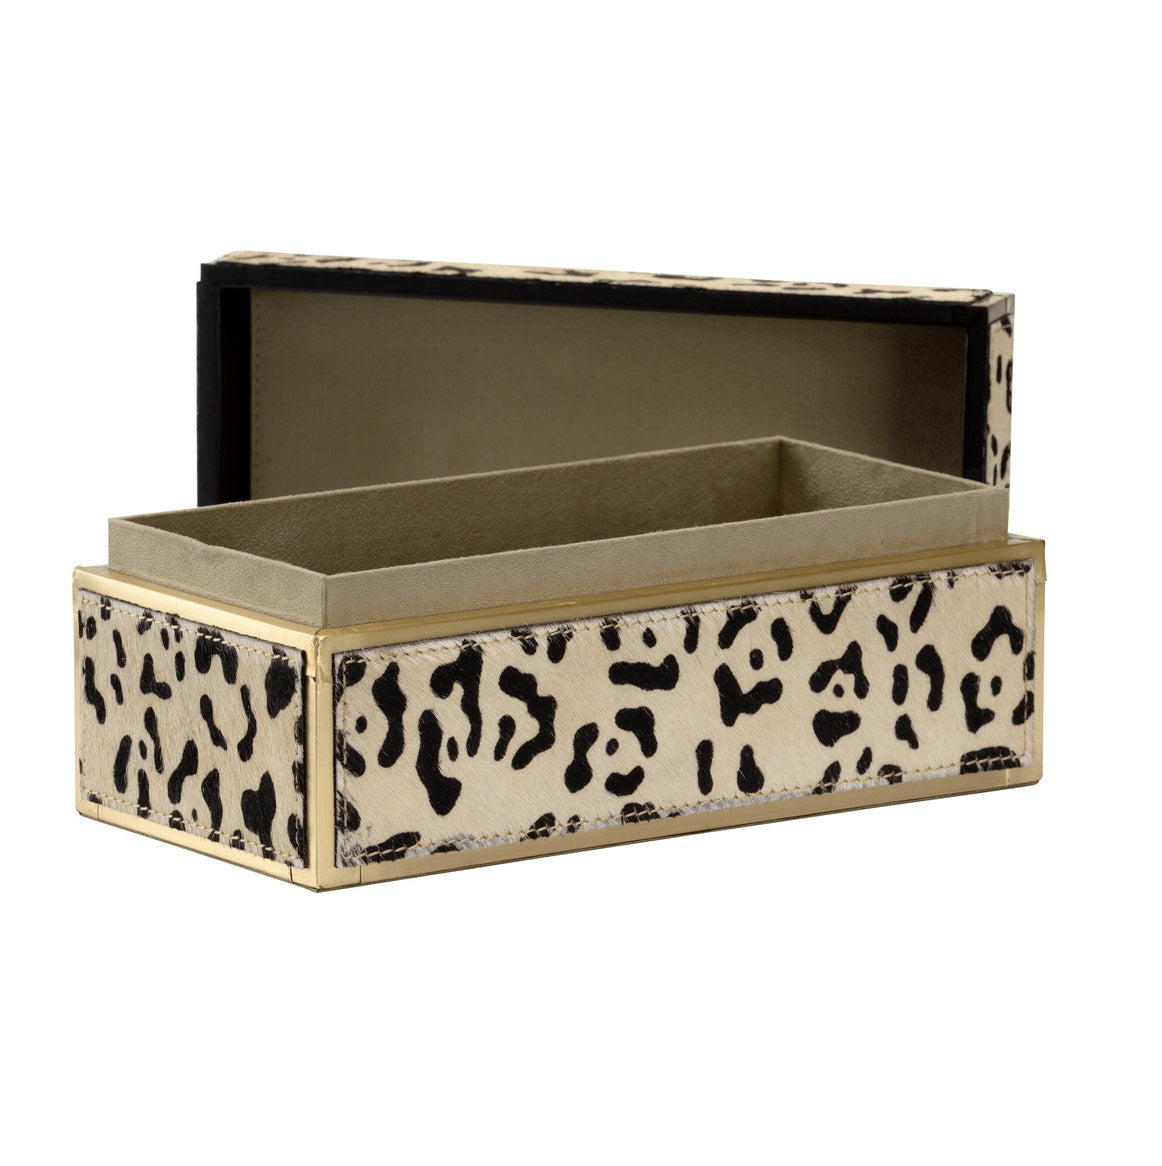 Leopard Skin Box.